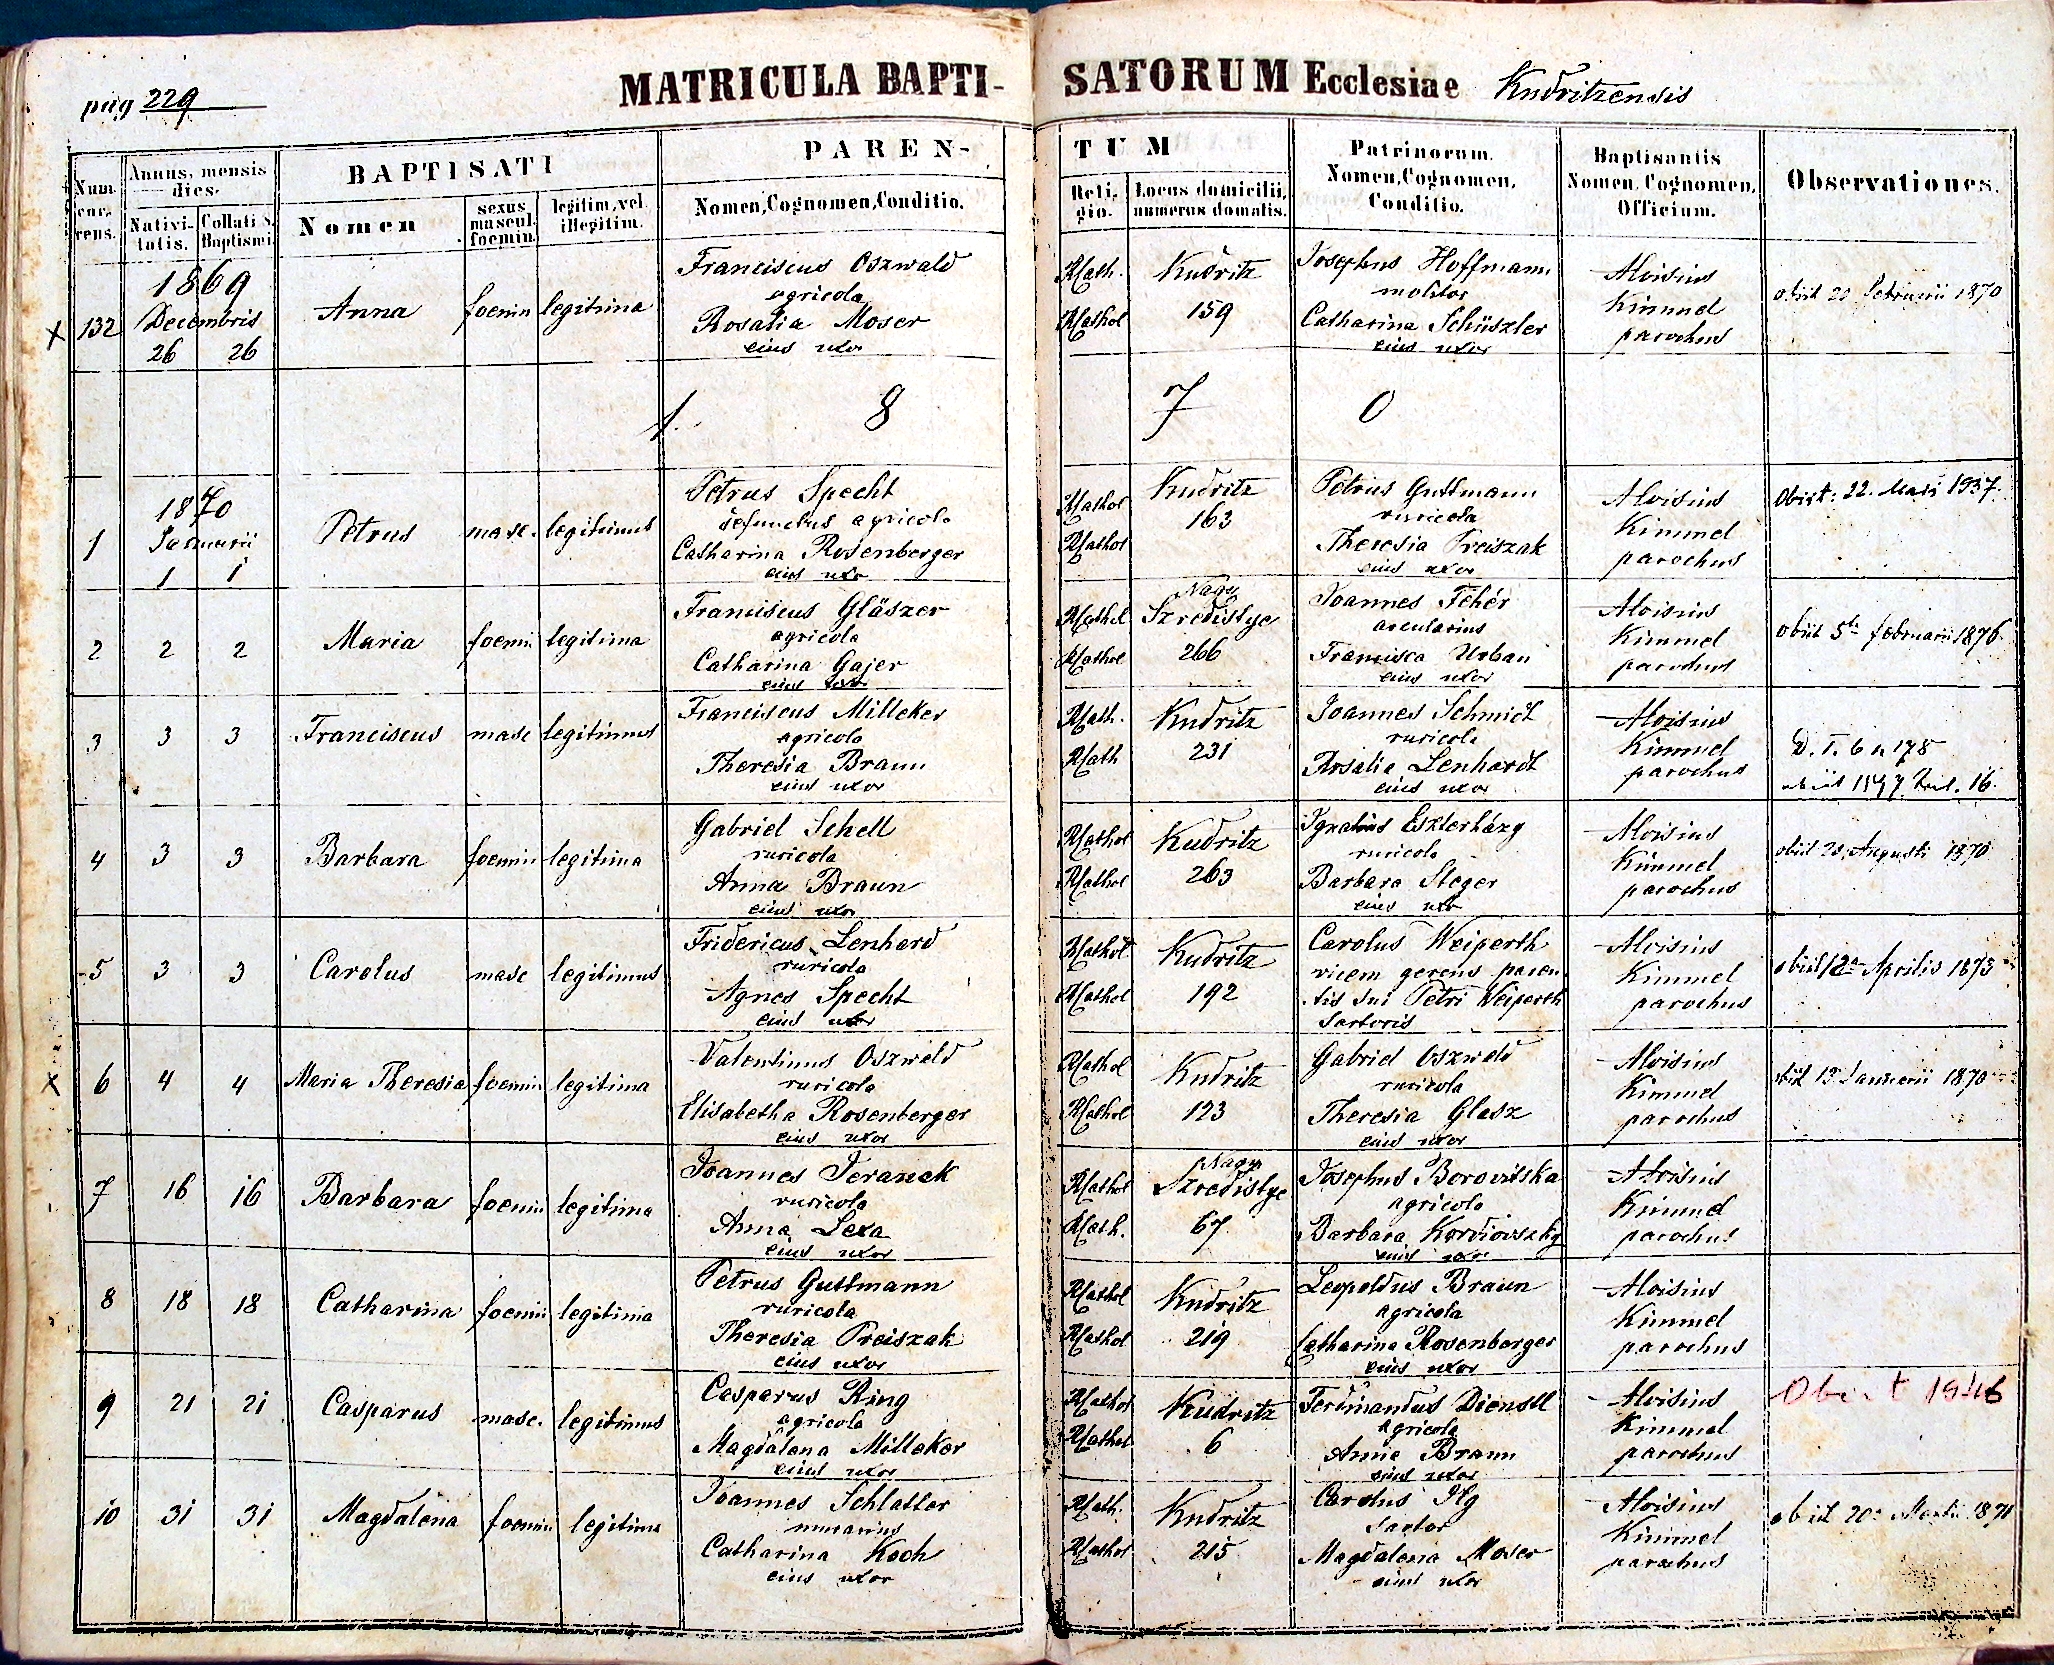 images/church_records/BIRTHS/1852-1870B/229